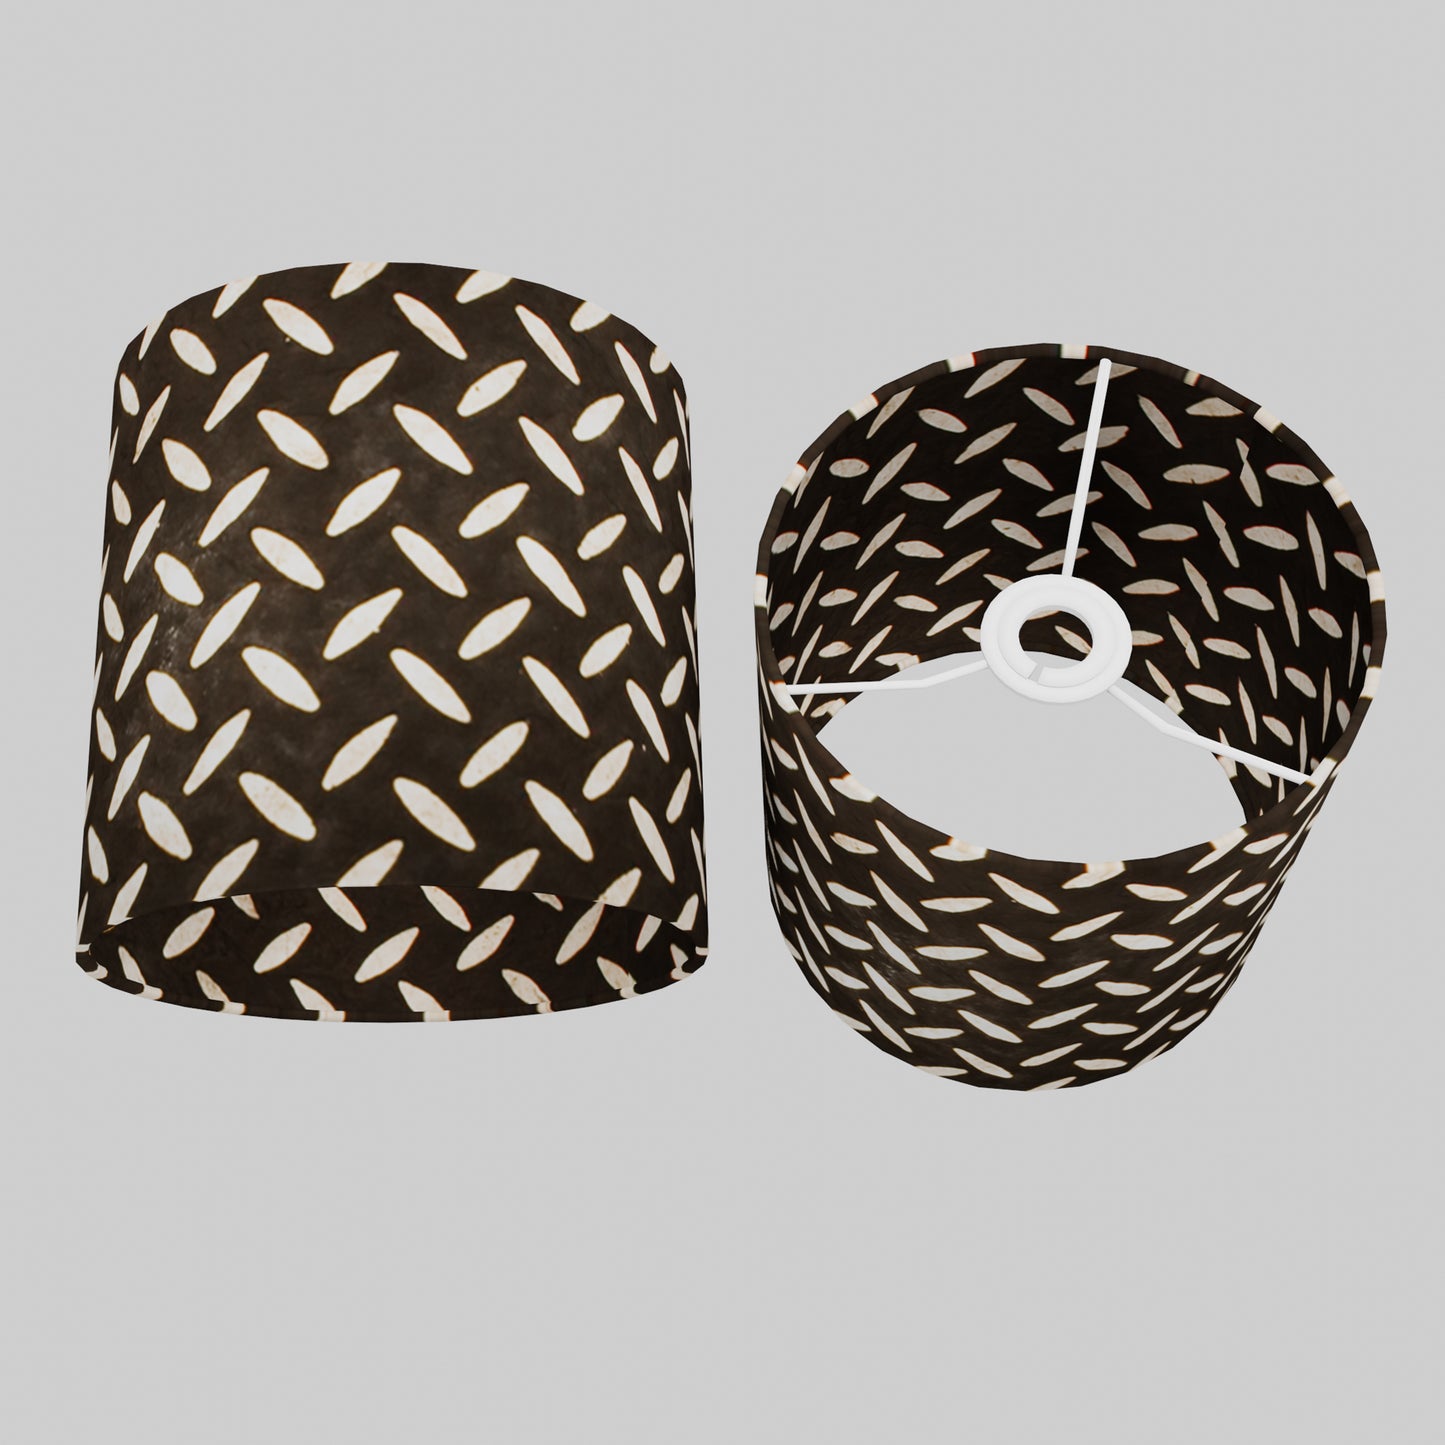 Drum Lamp Shade - P11 - Batik Tread Plate Black, 20cm(d) x 20cm(h)